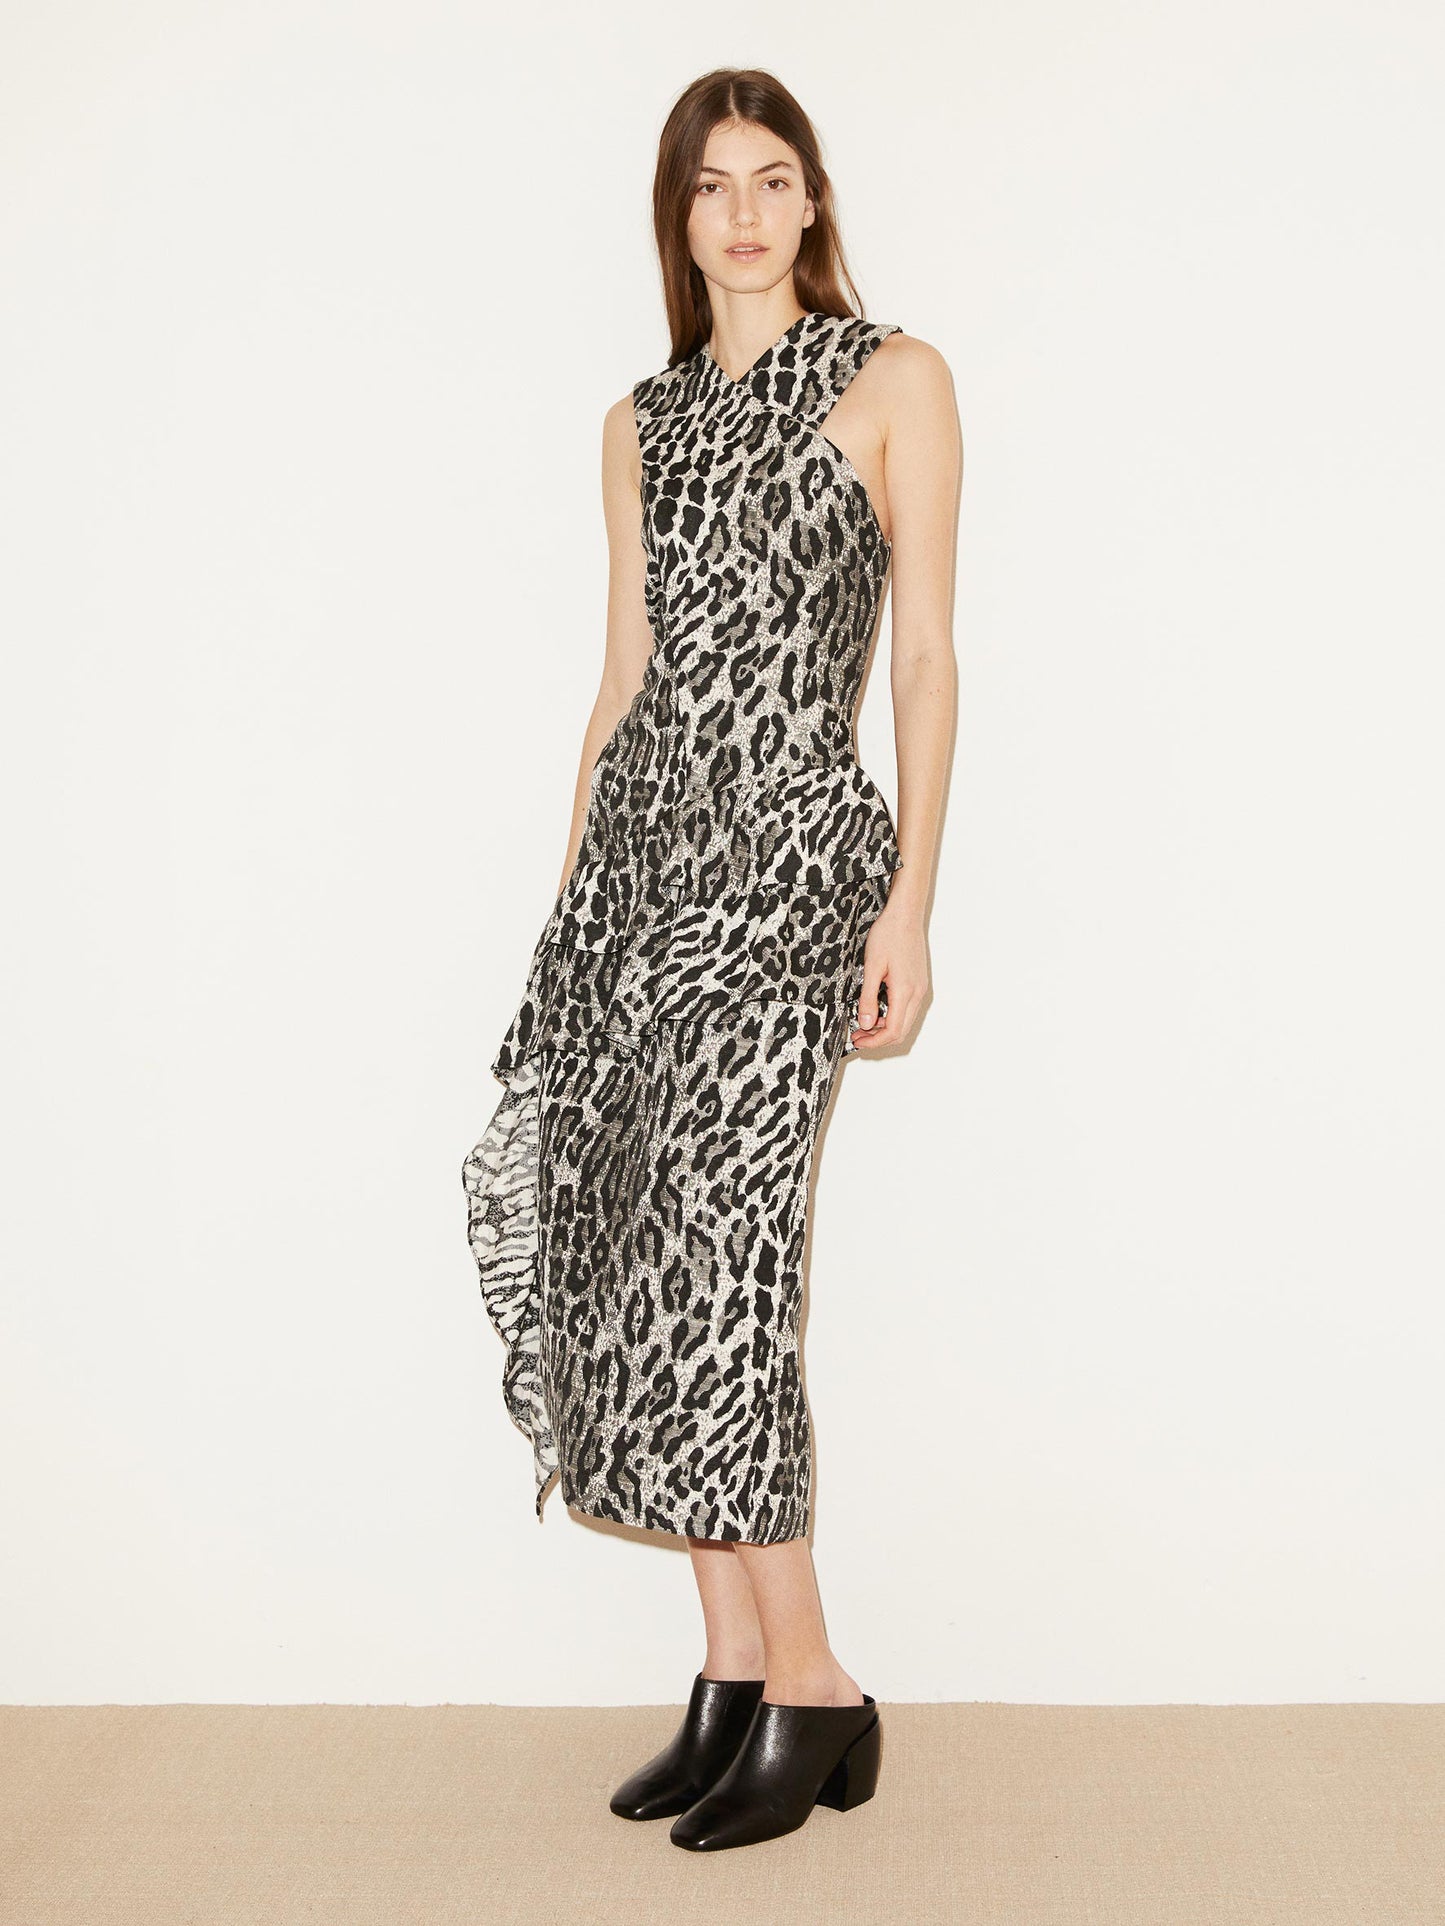 Amesia Grey Leopard Ruffle Dress